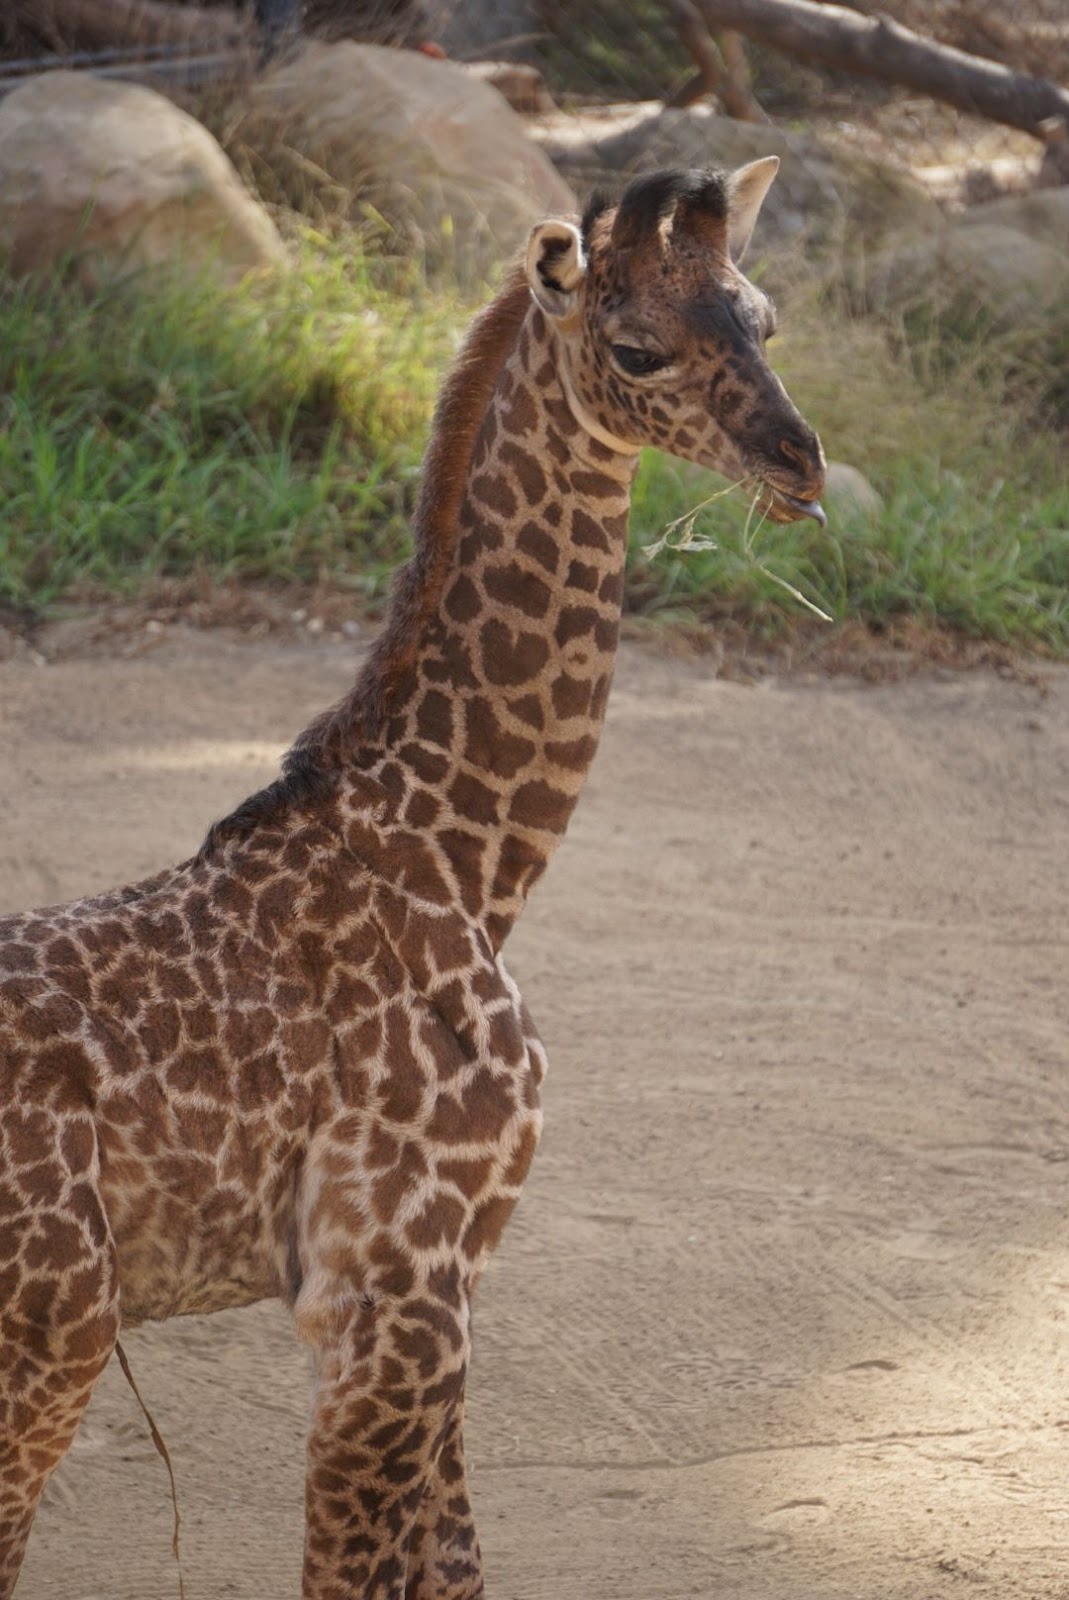 Photo of a baby giraffe at a zoo